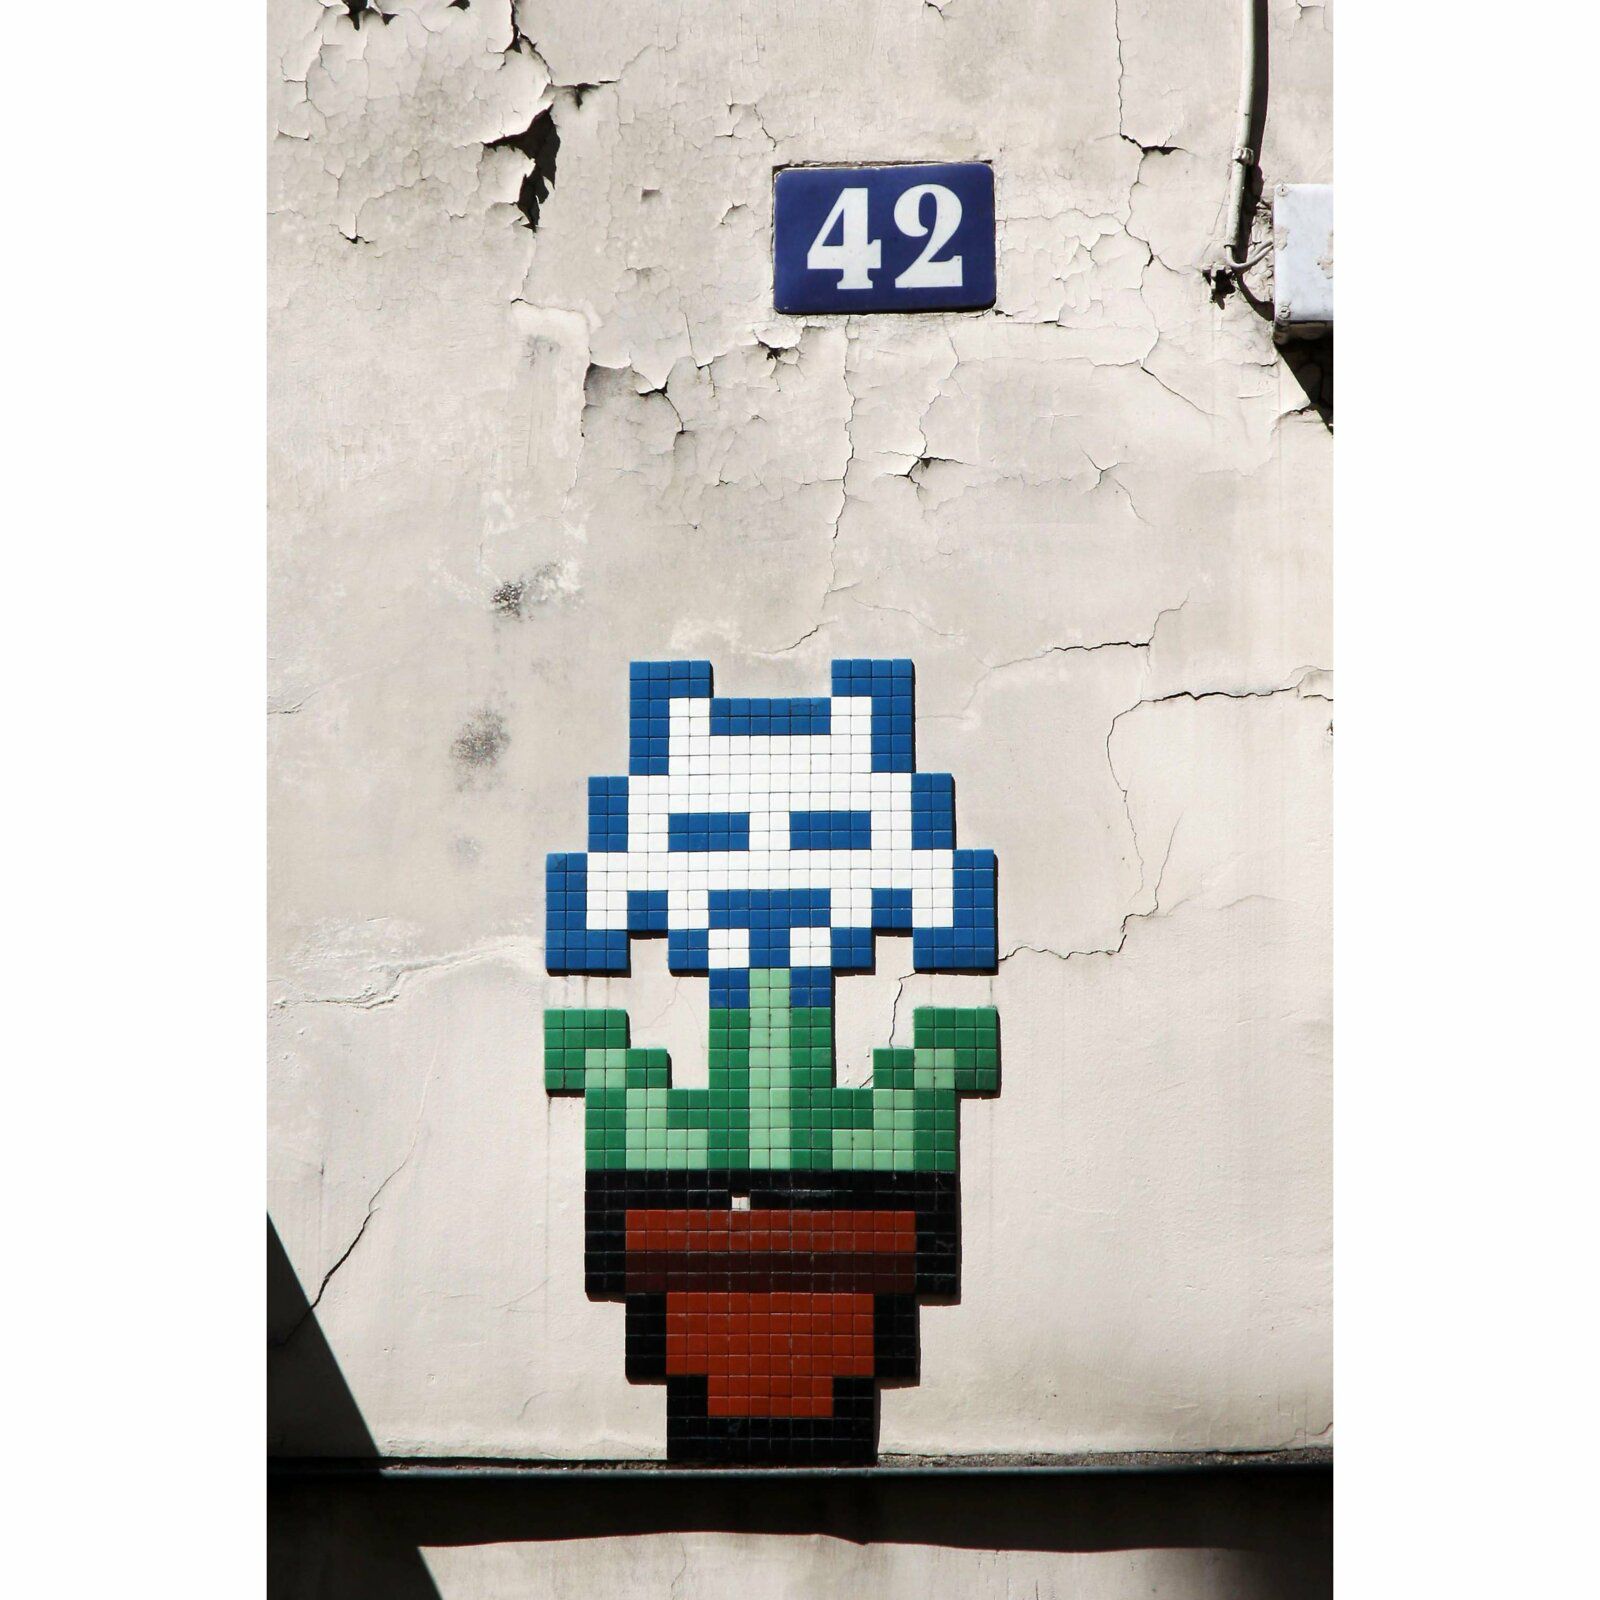 Un peu de street art à Paris (7) : Paris (5)